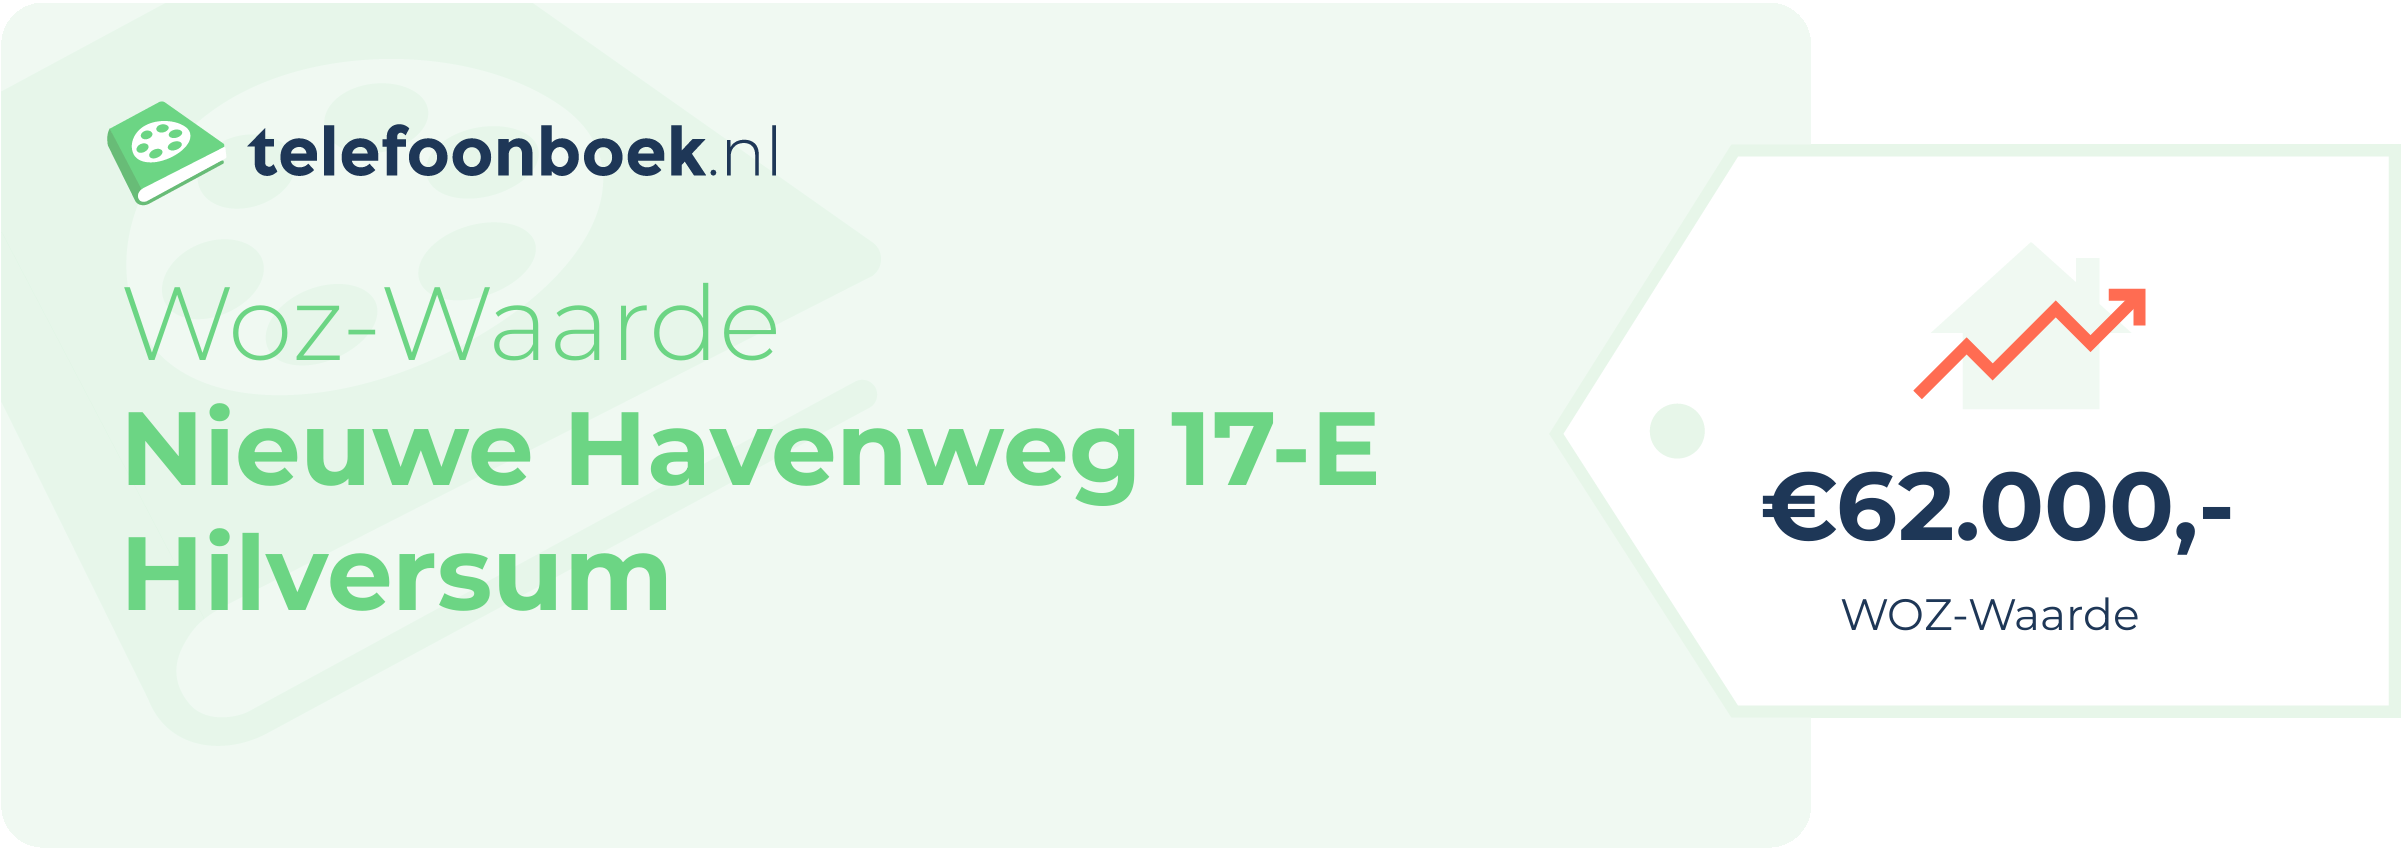 WOZ-waarde Nieuwe Havenweg 17-E Hilversum